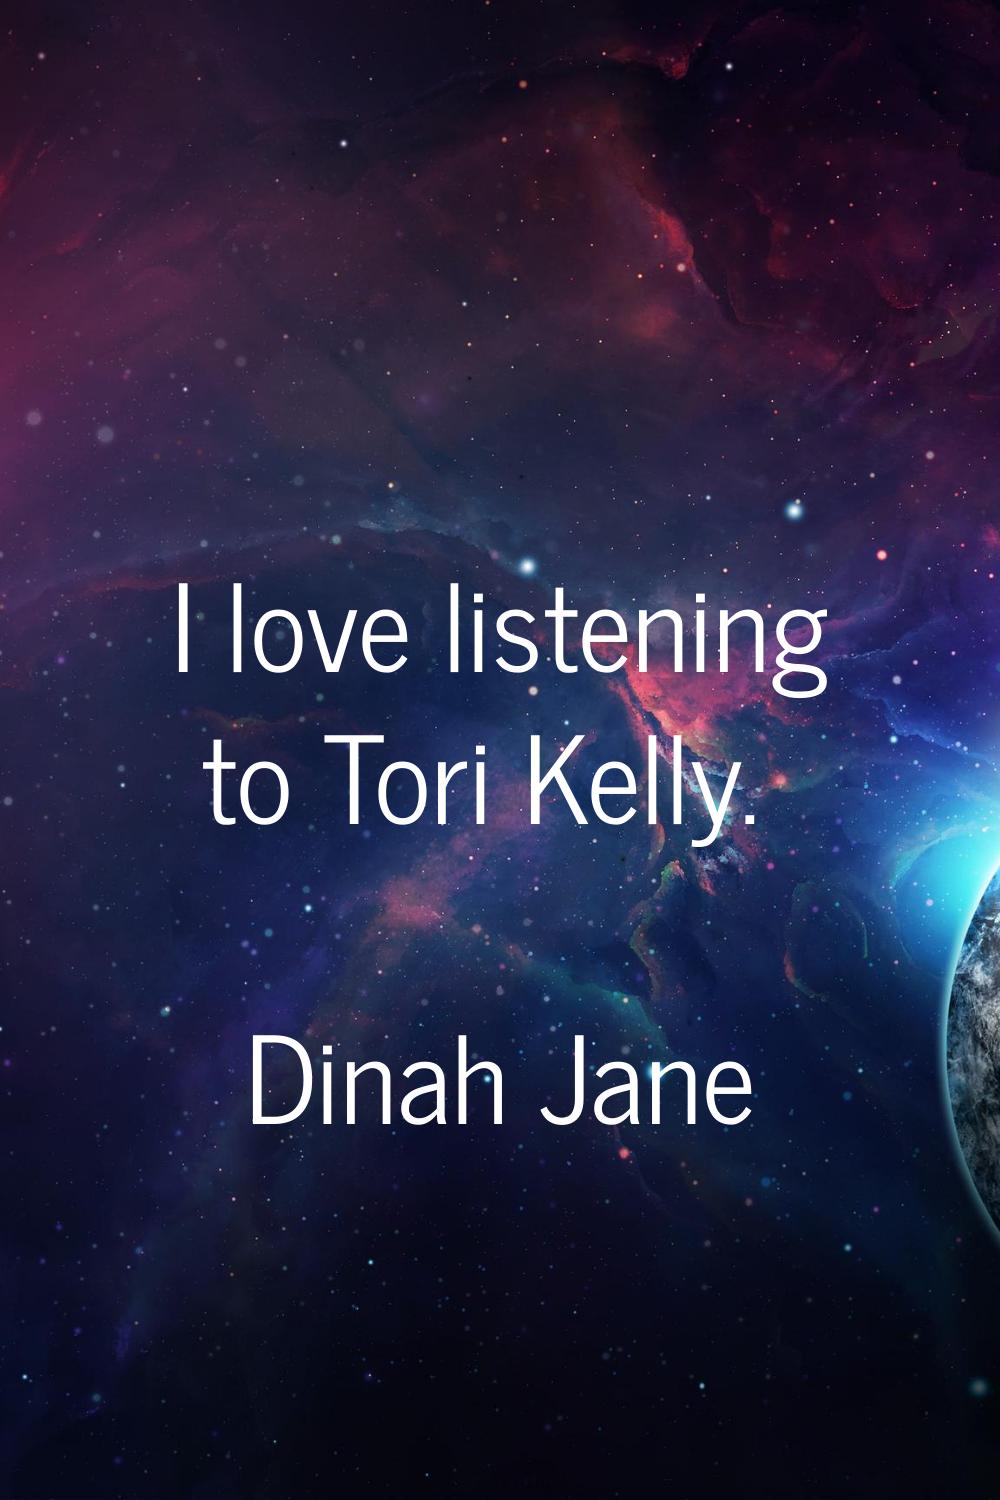 I love listening to Tori Kelly.